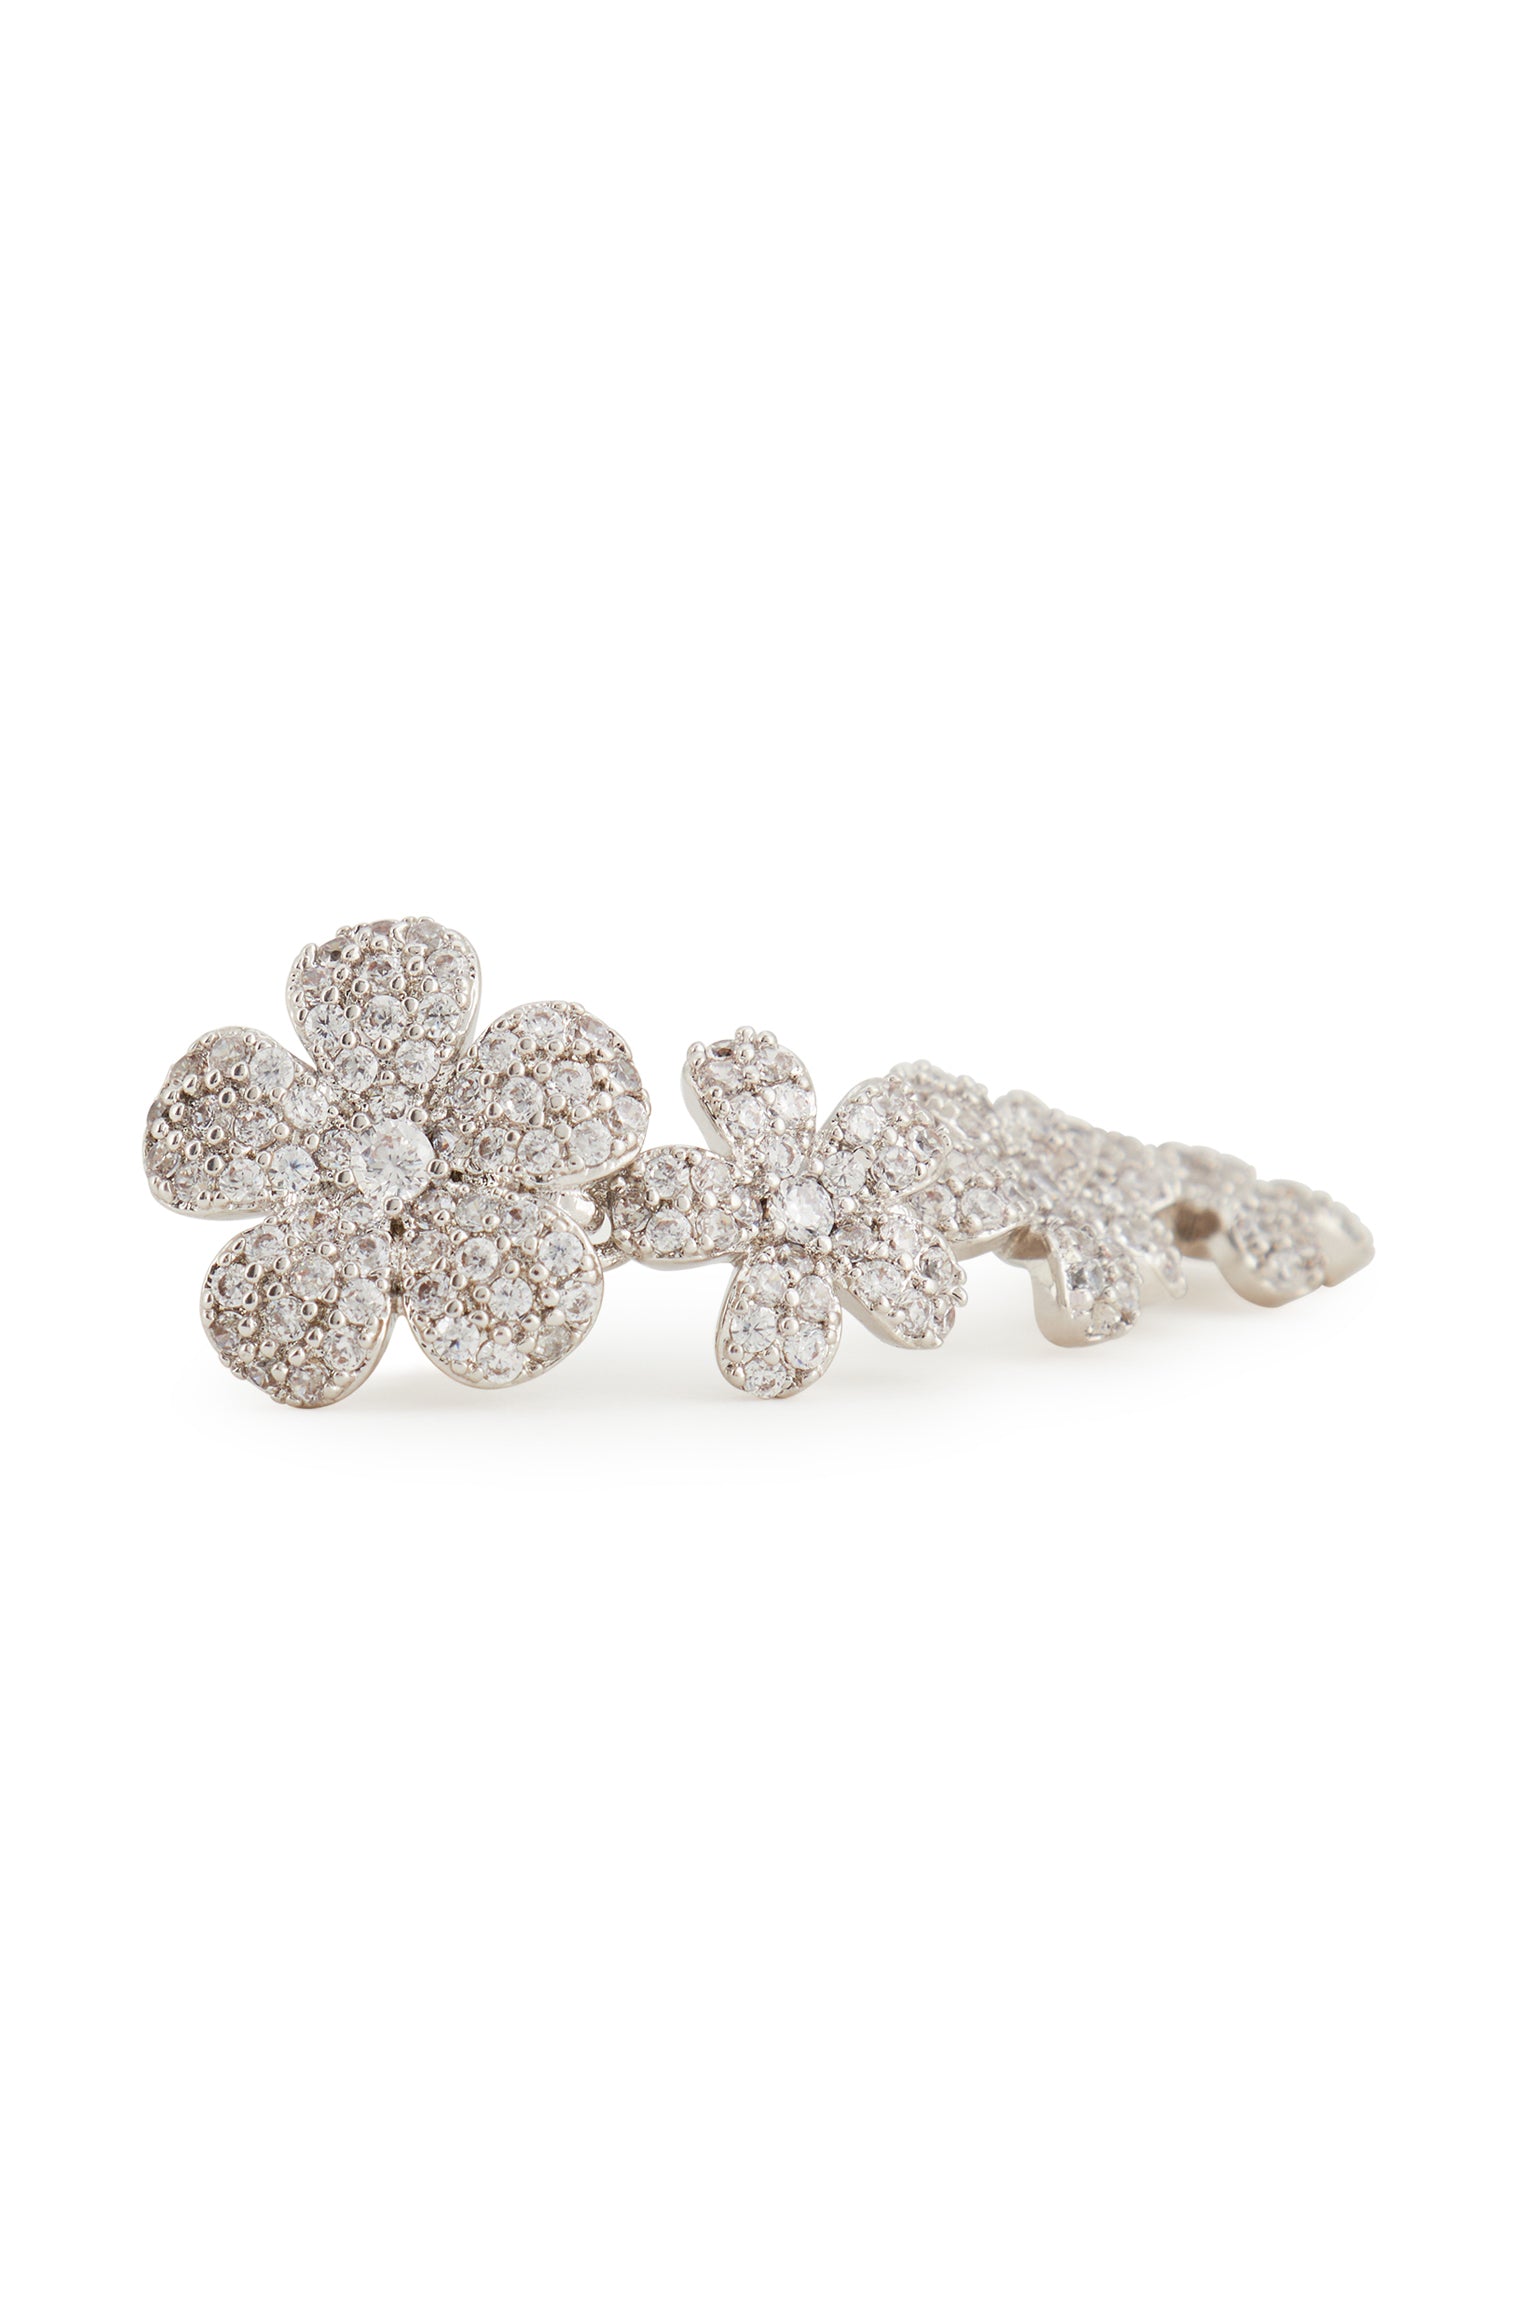 MELUSINA BIJOUX Pendant Earrings with Rhodium Flowers